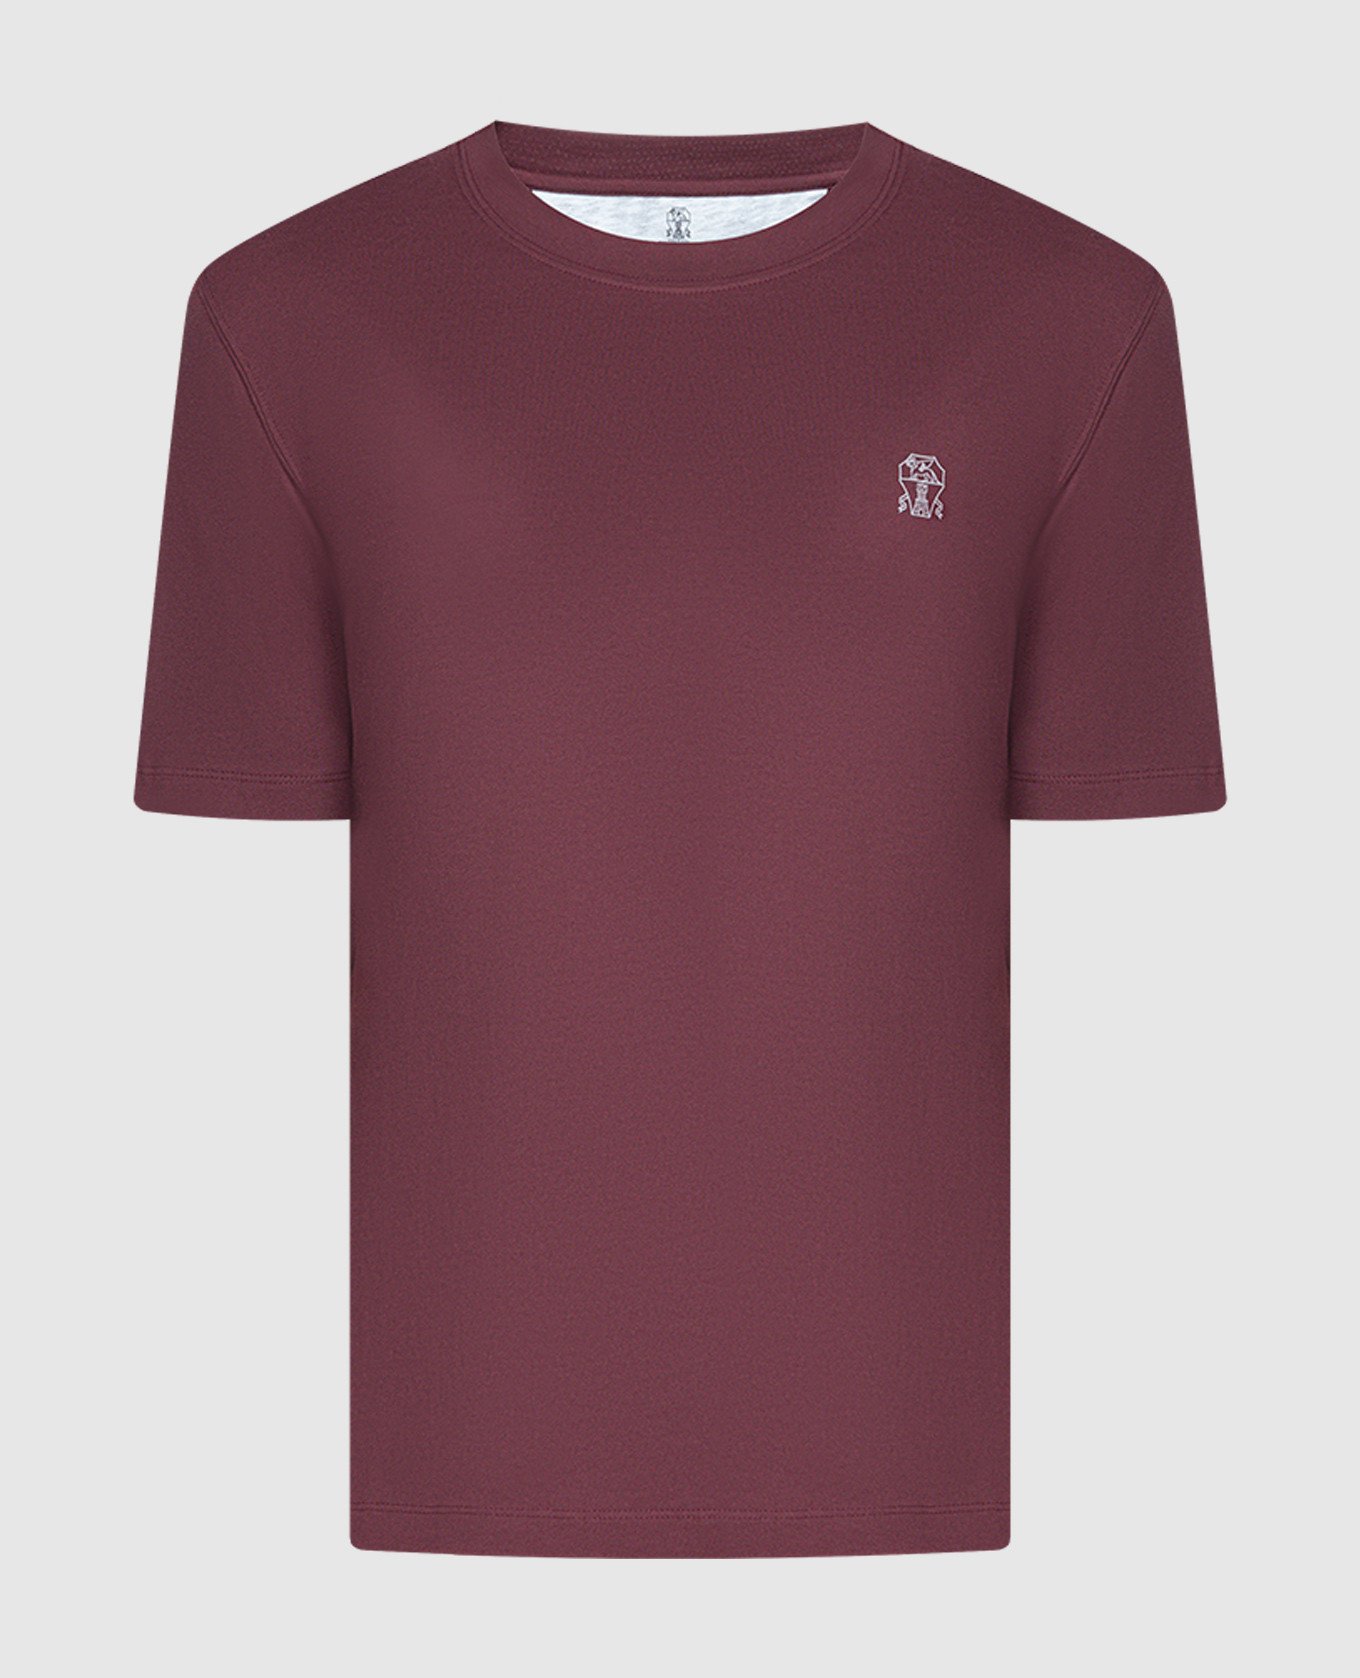 Burgundy t-shirt with logo print